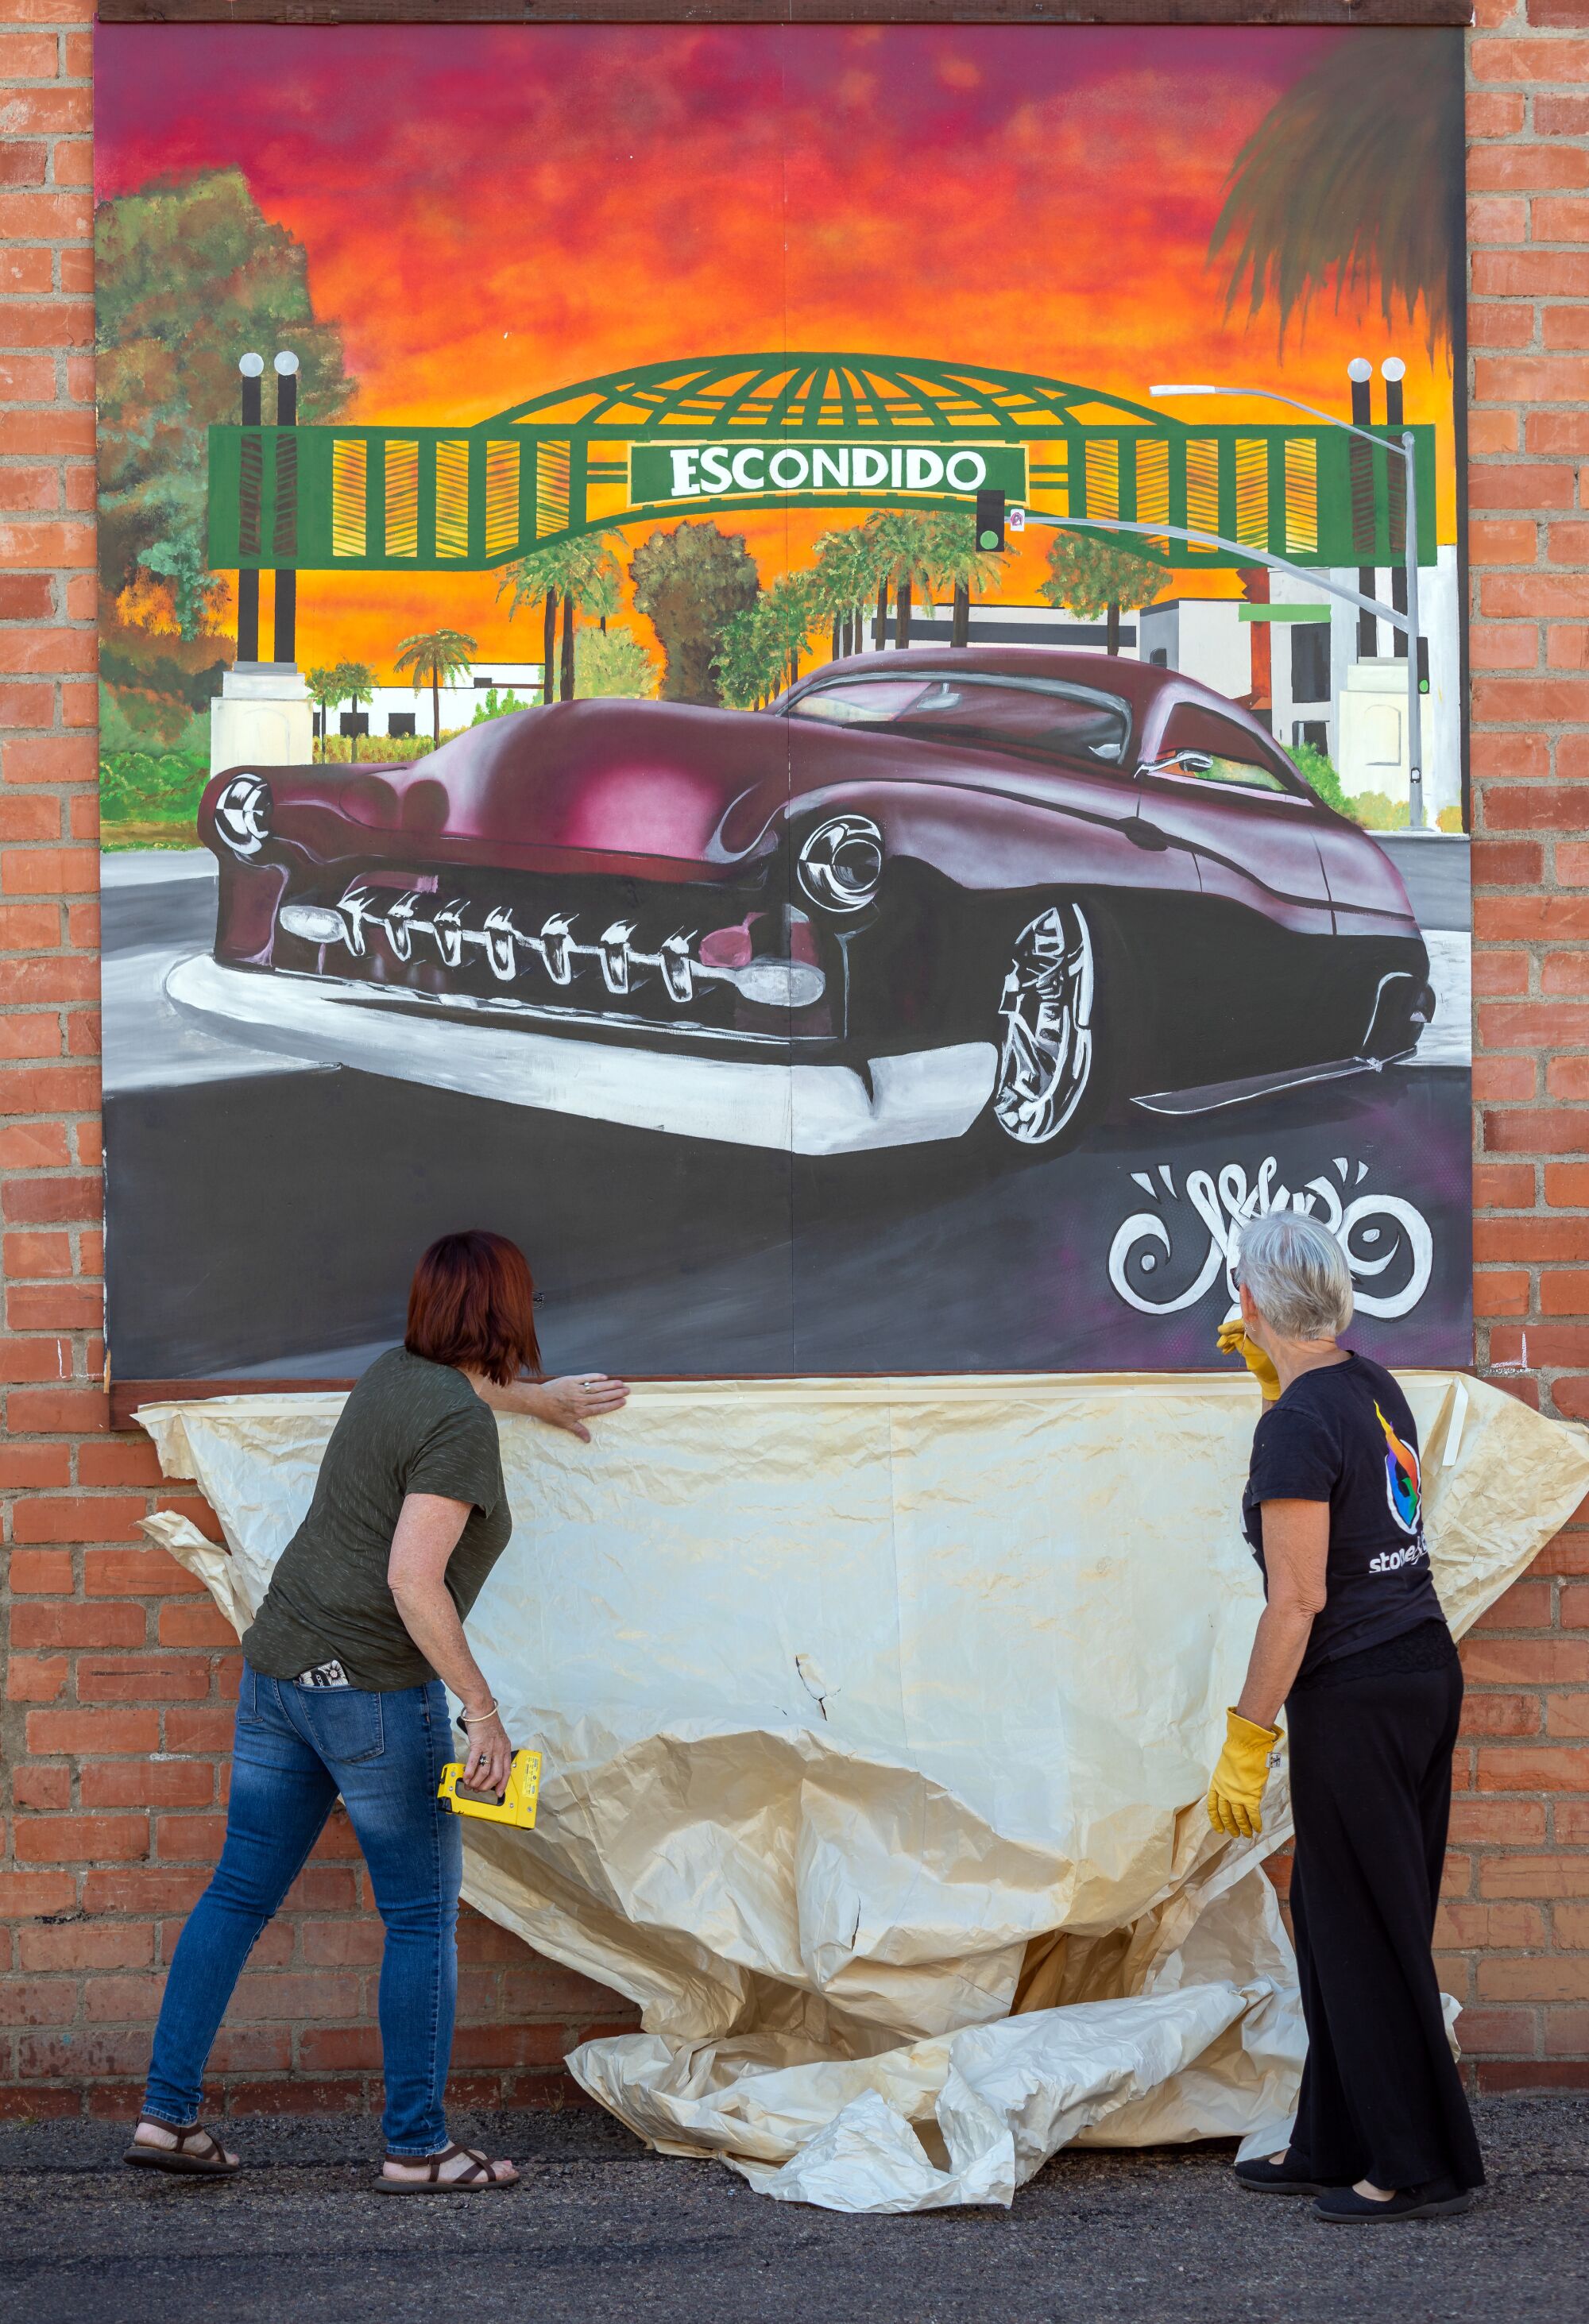 Escondido Art Association committee members Heather Moe and Carol Rogers install artist mural panels